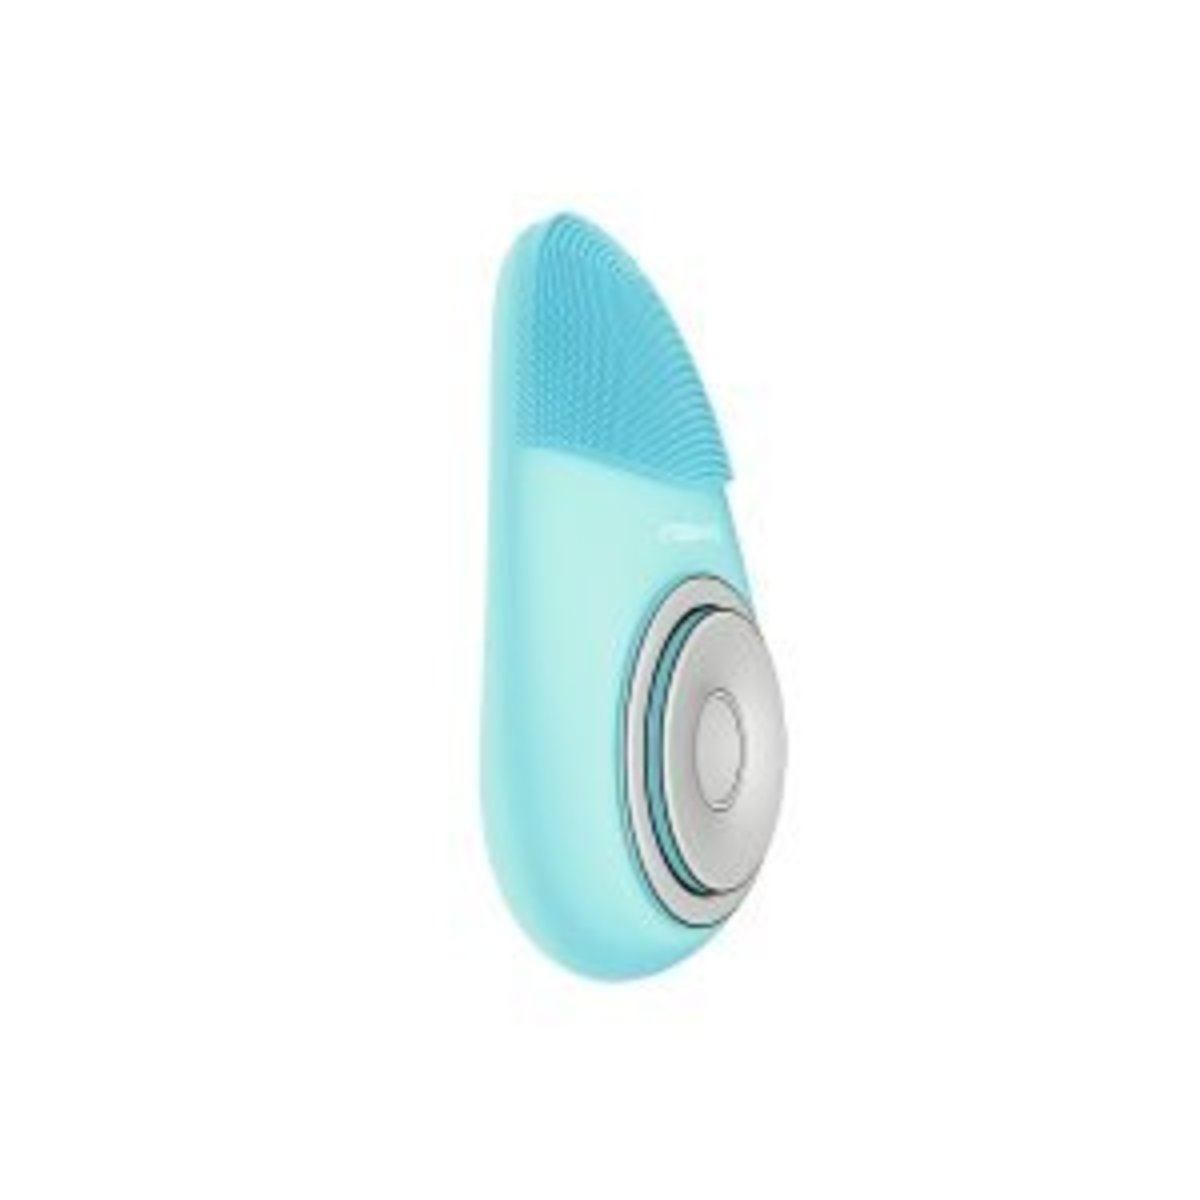 ABKO SV01 韓國 Silicone Facial Cleansing Brush 無線洗面機 Facial機 潔面機 / 美容儀 / 提拉儀 / 面部按摩器 IPX7 / 充電式 / 超聲波 / 卸妝 / 塑形 / 深層潔面